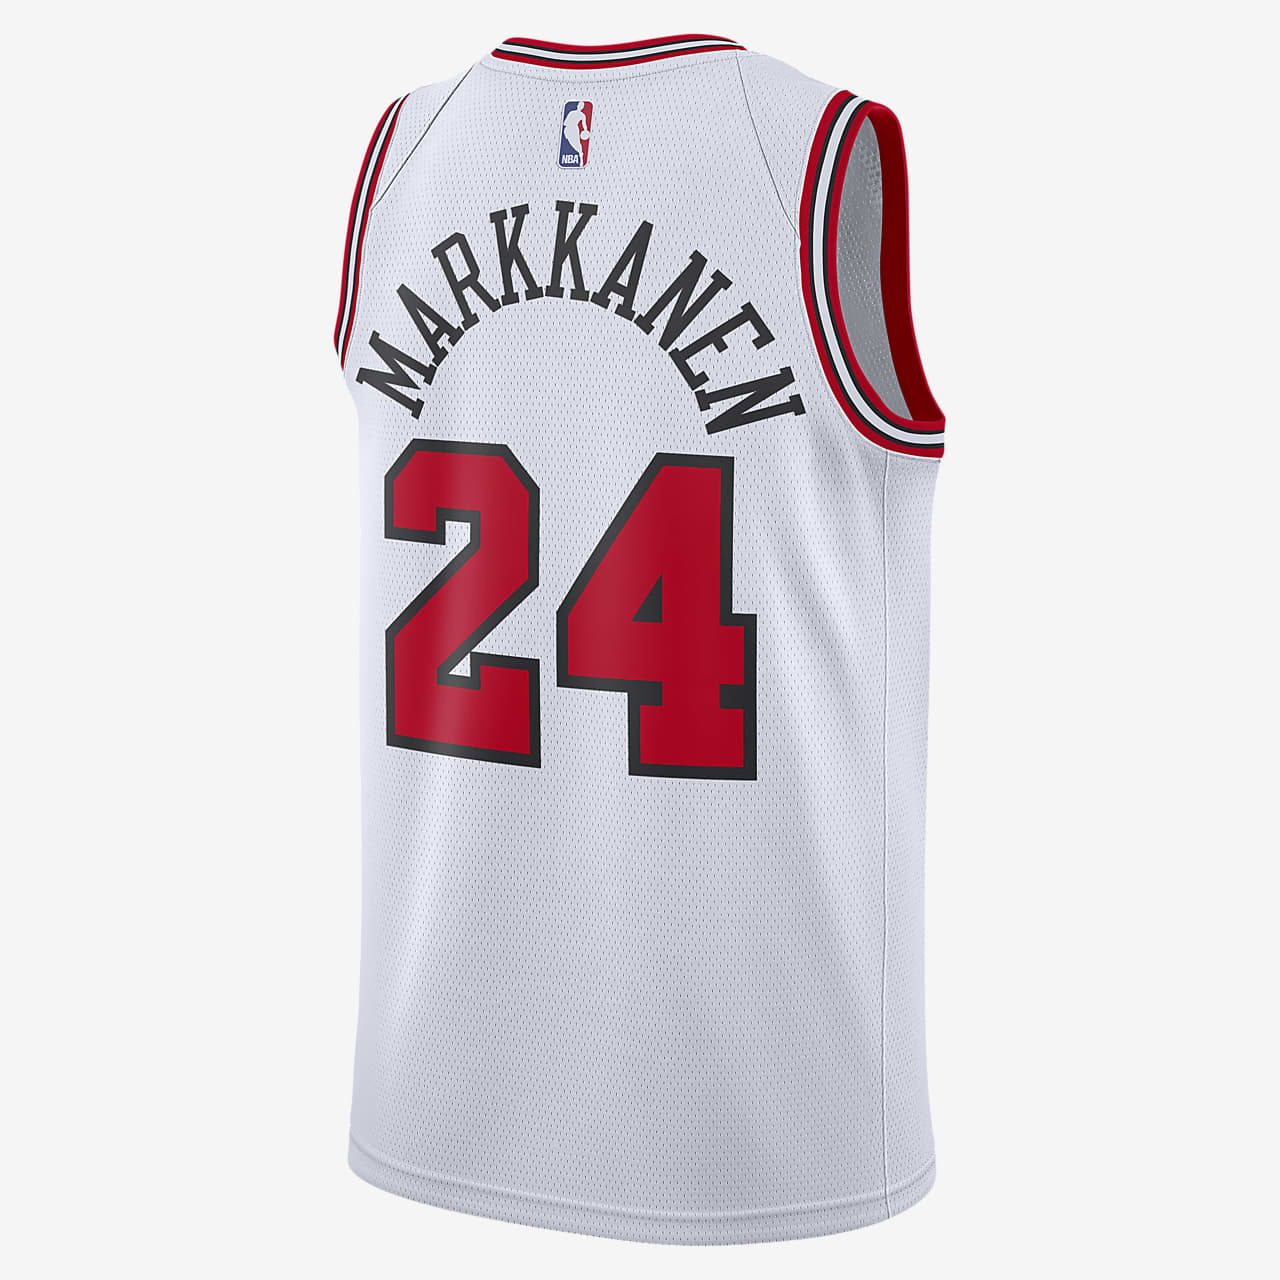 Camiseta Nike NBA Markkanen Bulls Association Edition. Nike .com